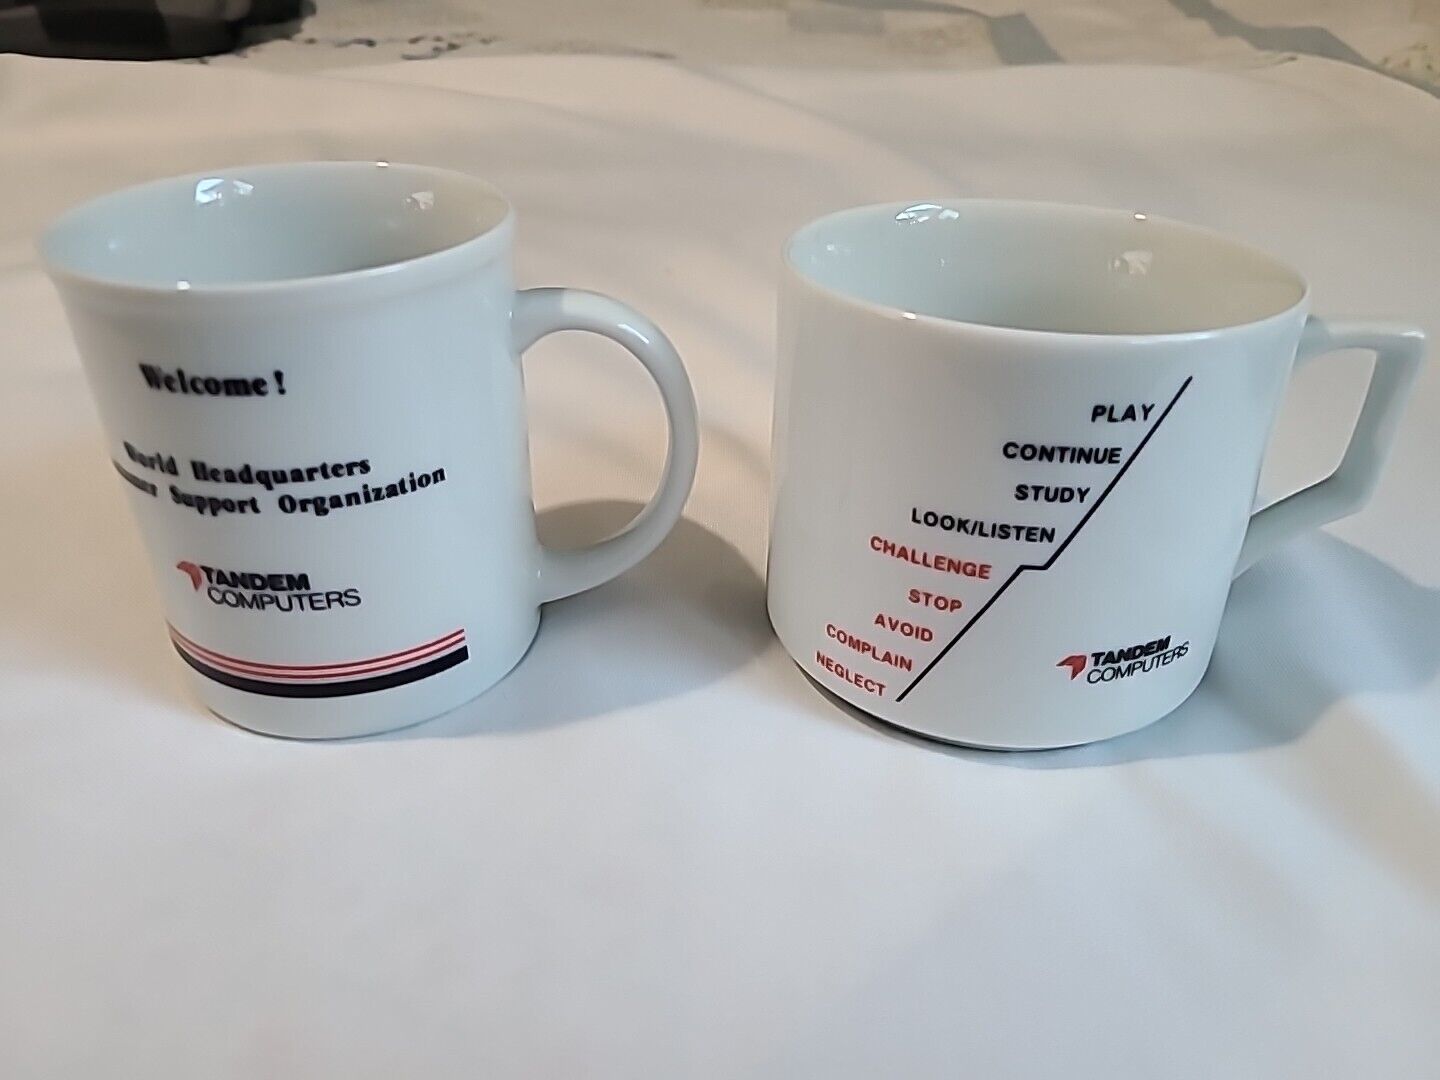 2 Vtg Tandem Computers  Mugs Ceramic World Headquarters Customer Support, Commit